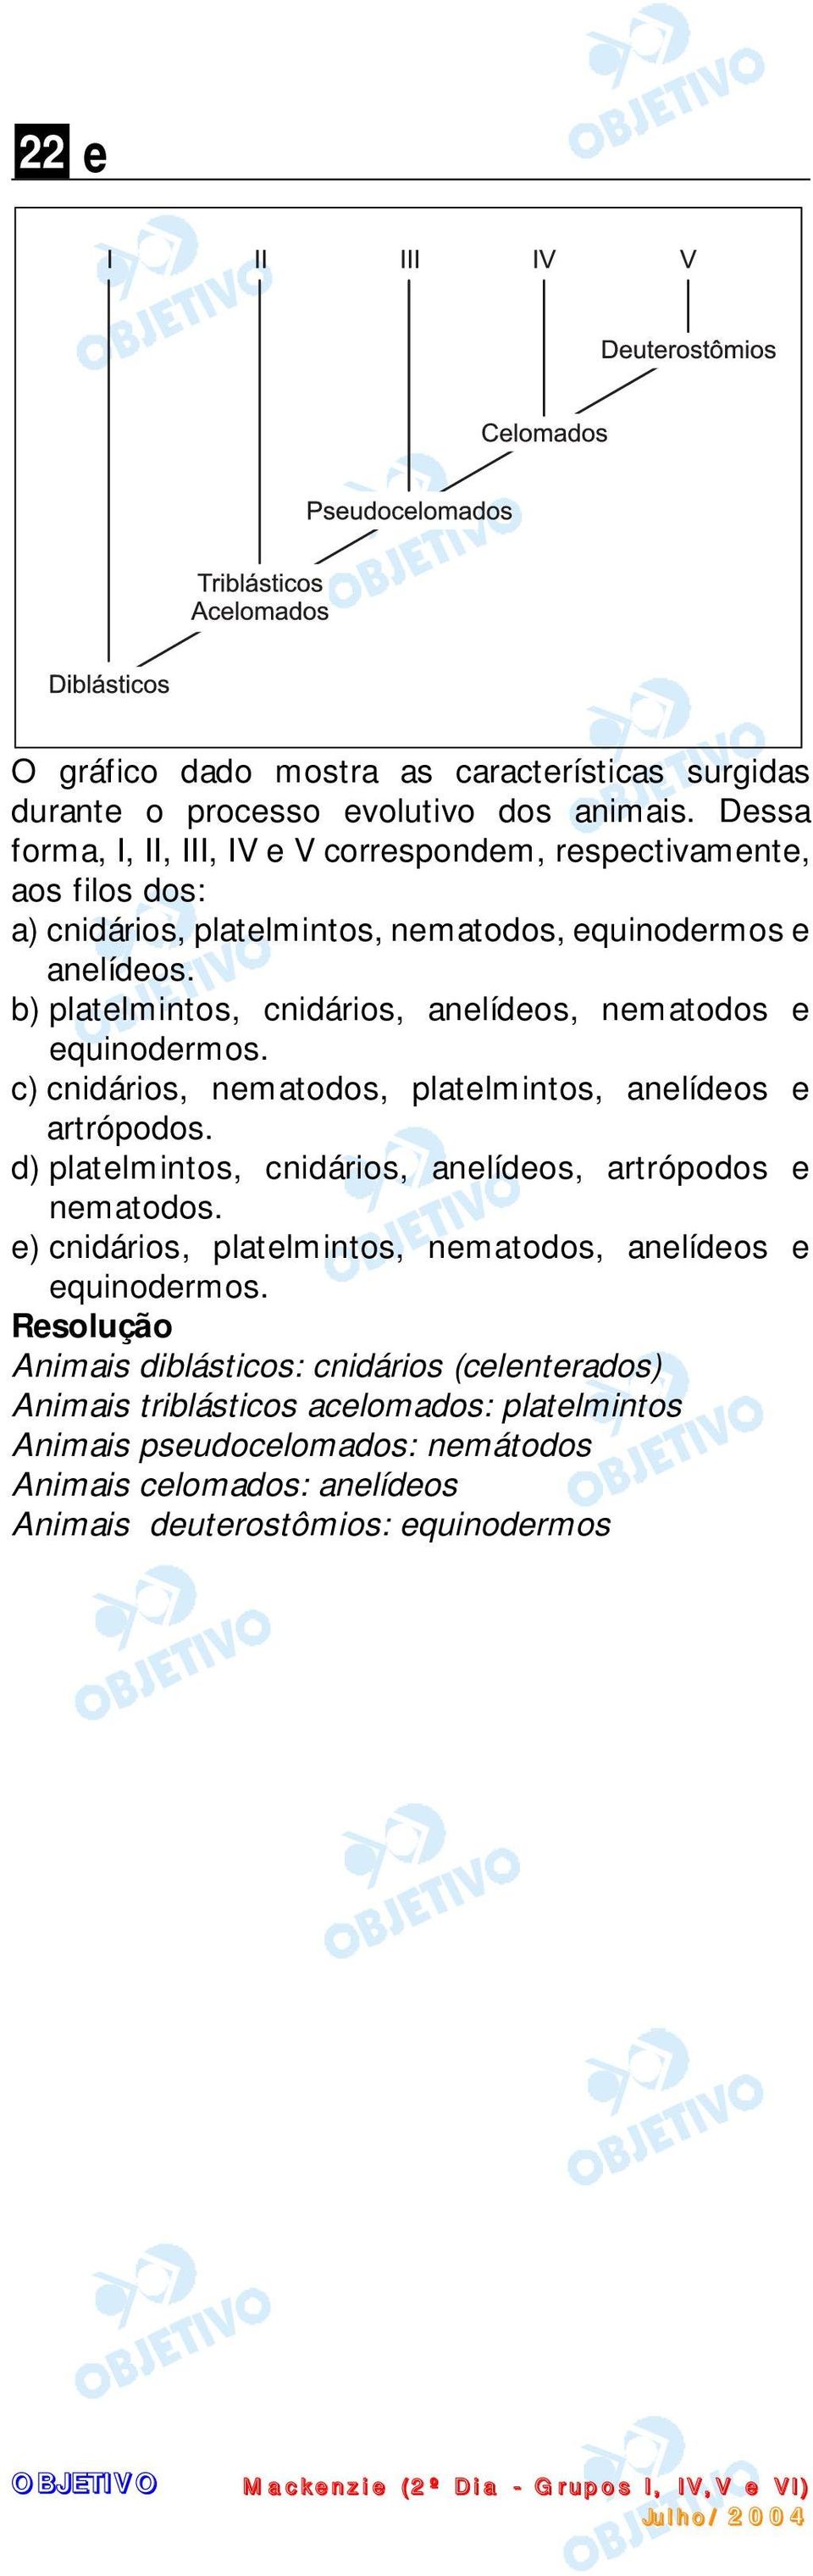 b) platelmintos, cnidários, anelídeos, nematodos e equinodermos. c) cnidários, nematodos, platelmintos, anelídeos e artrópodos.